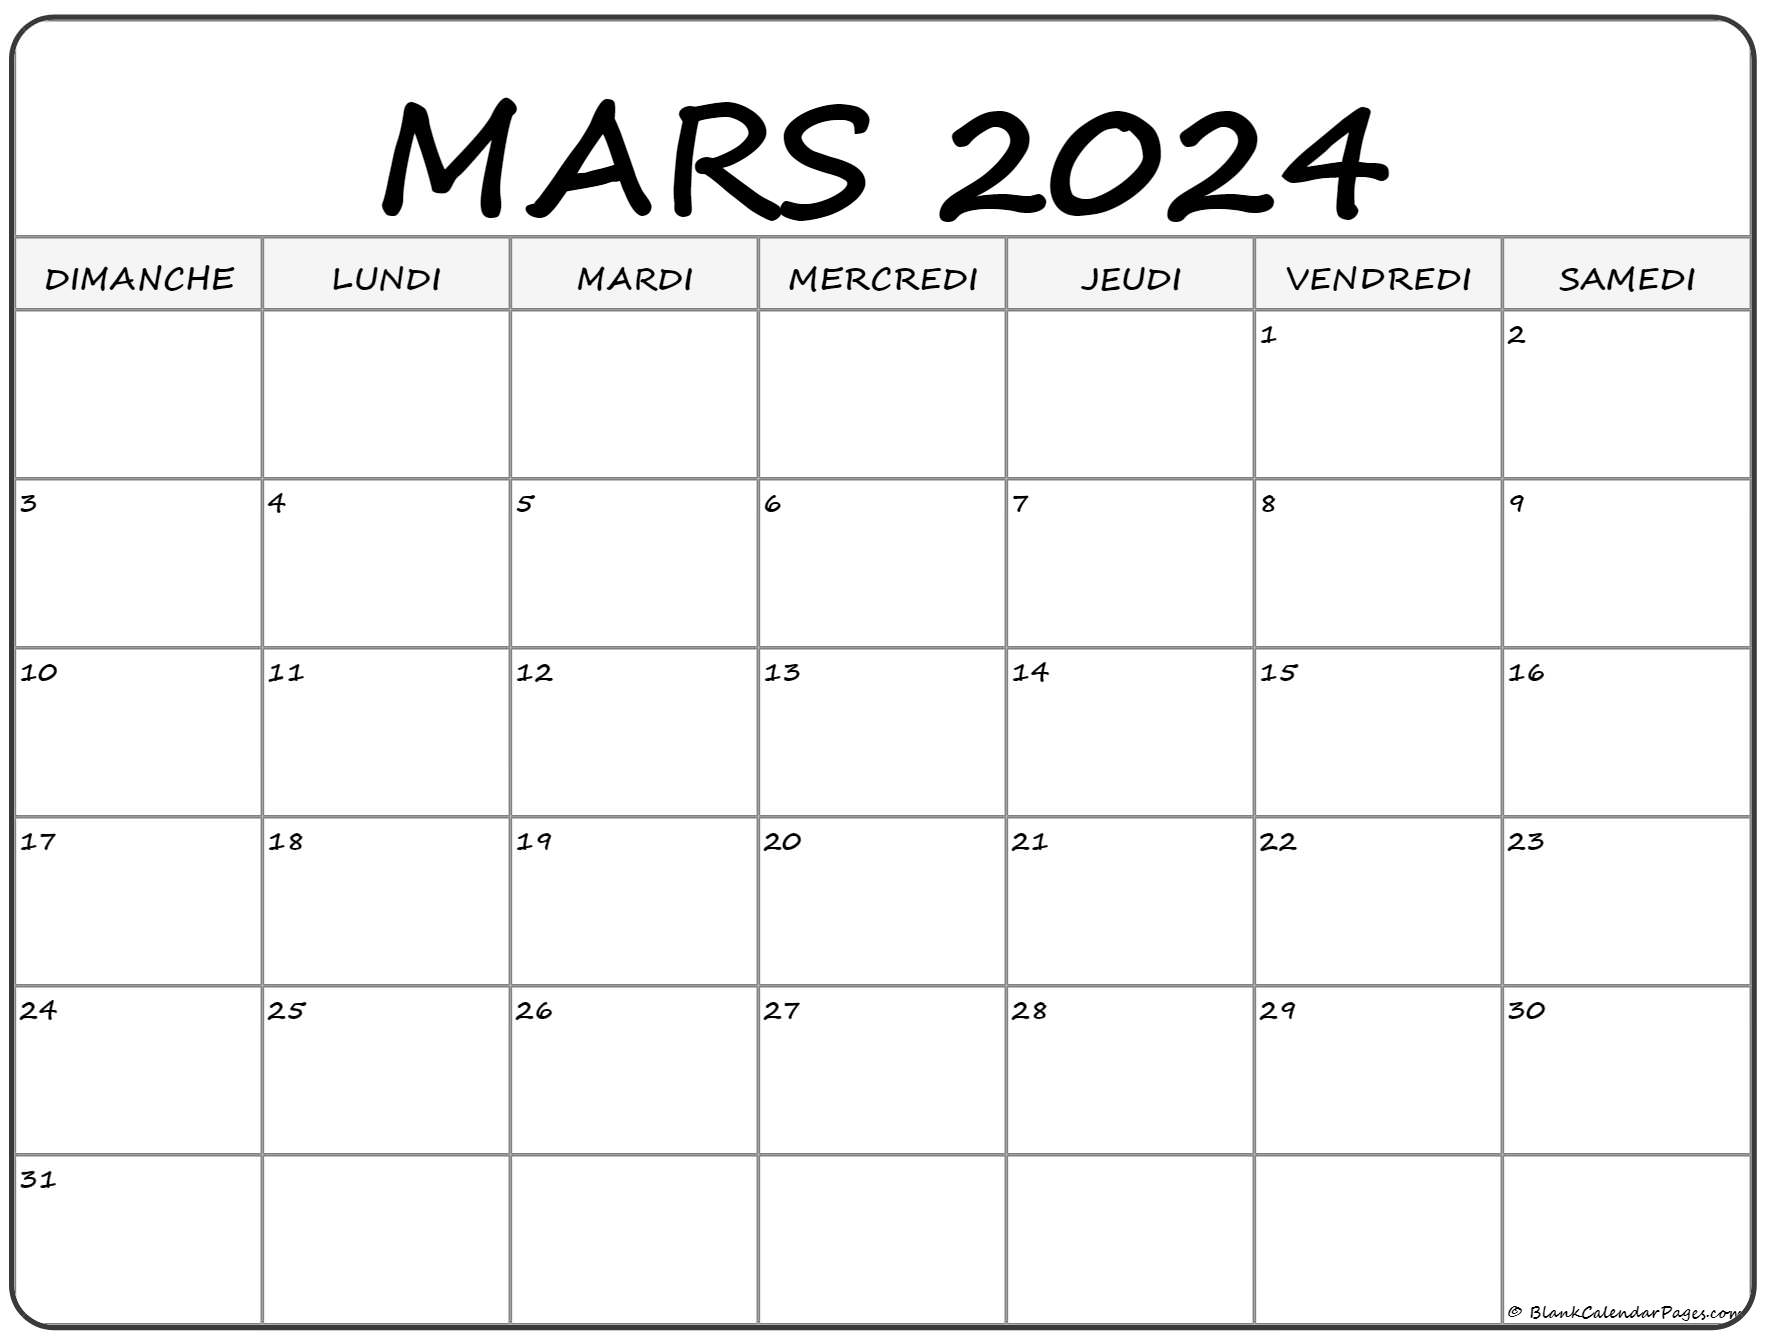 https://blankcalendarpages.com/printable_calendar/calendrier1/mars-2024-calendrier-fr1.jpg